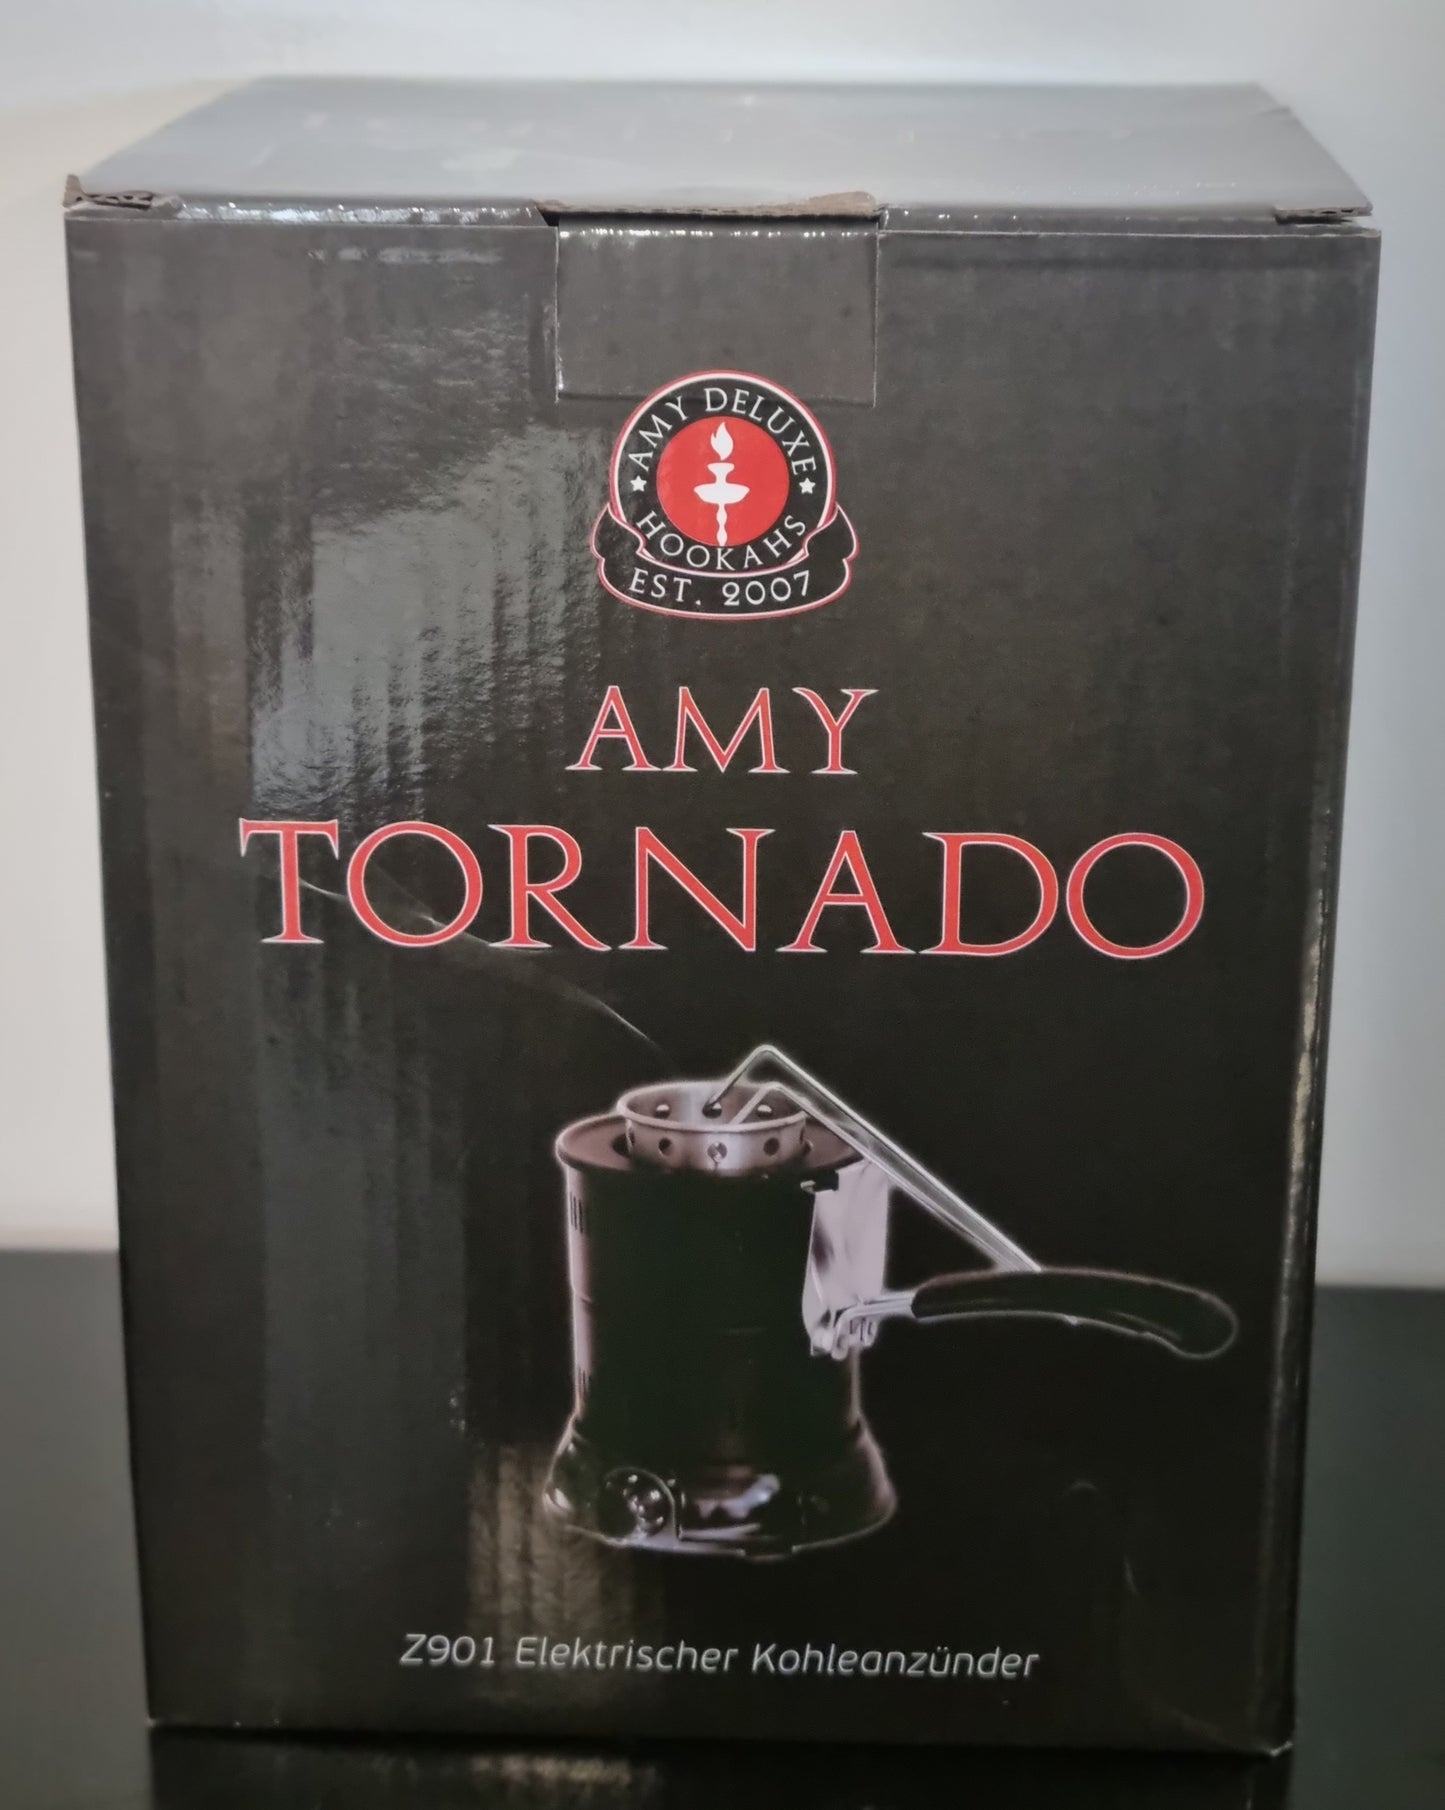 Amy Tornado